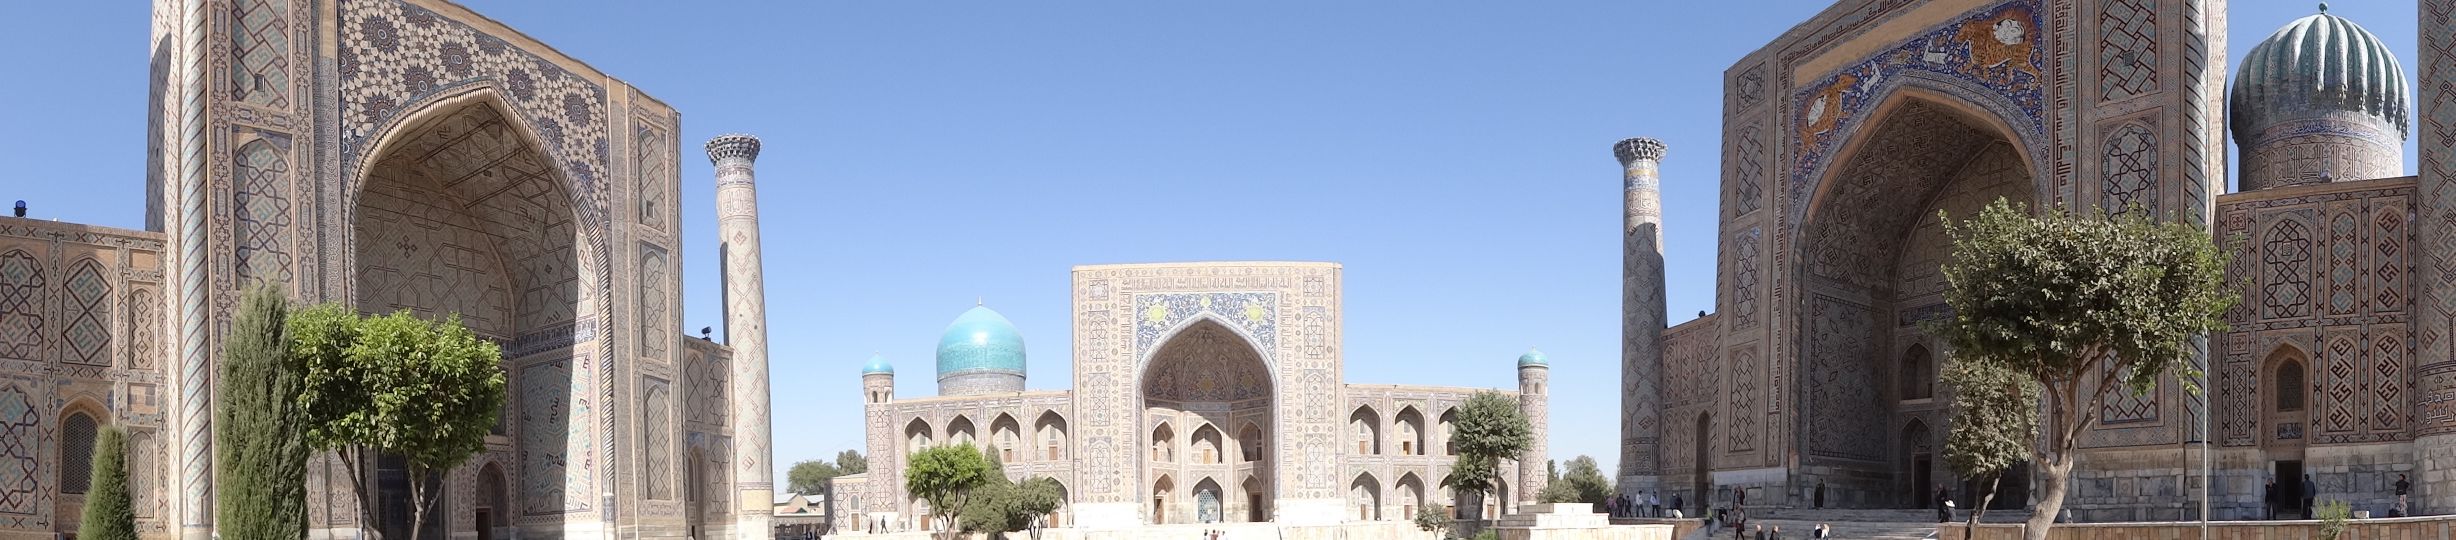 Uzbekistan – Samarkand